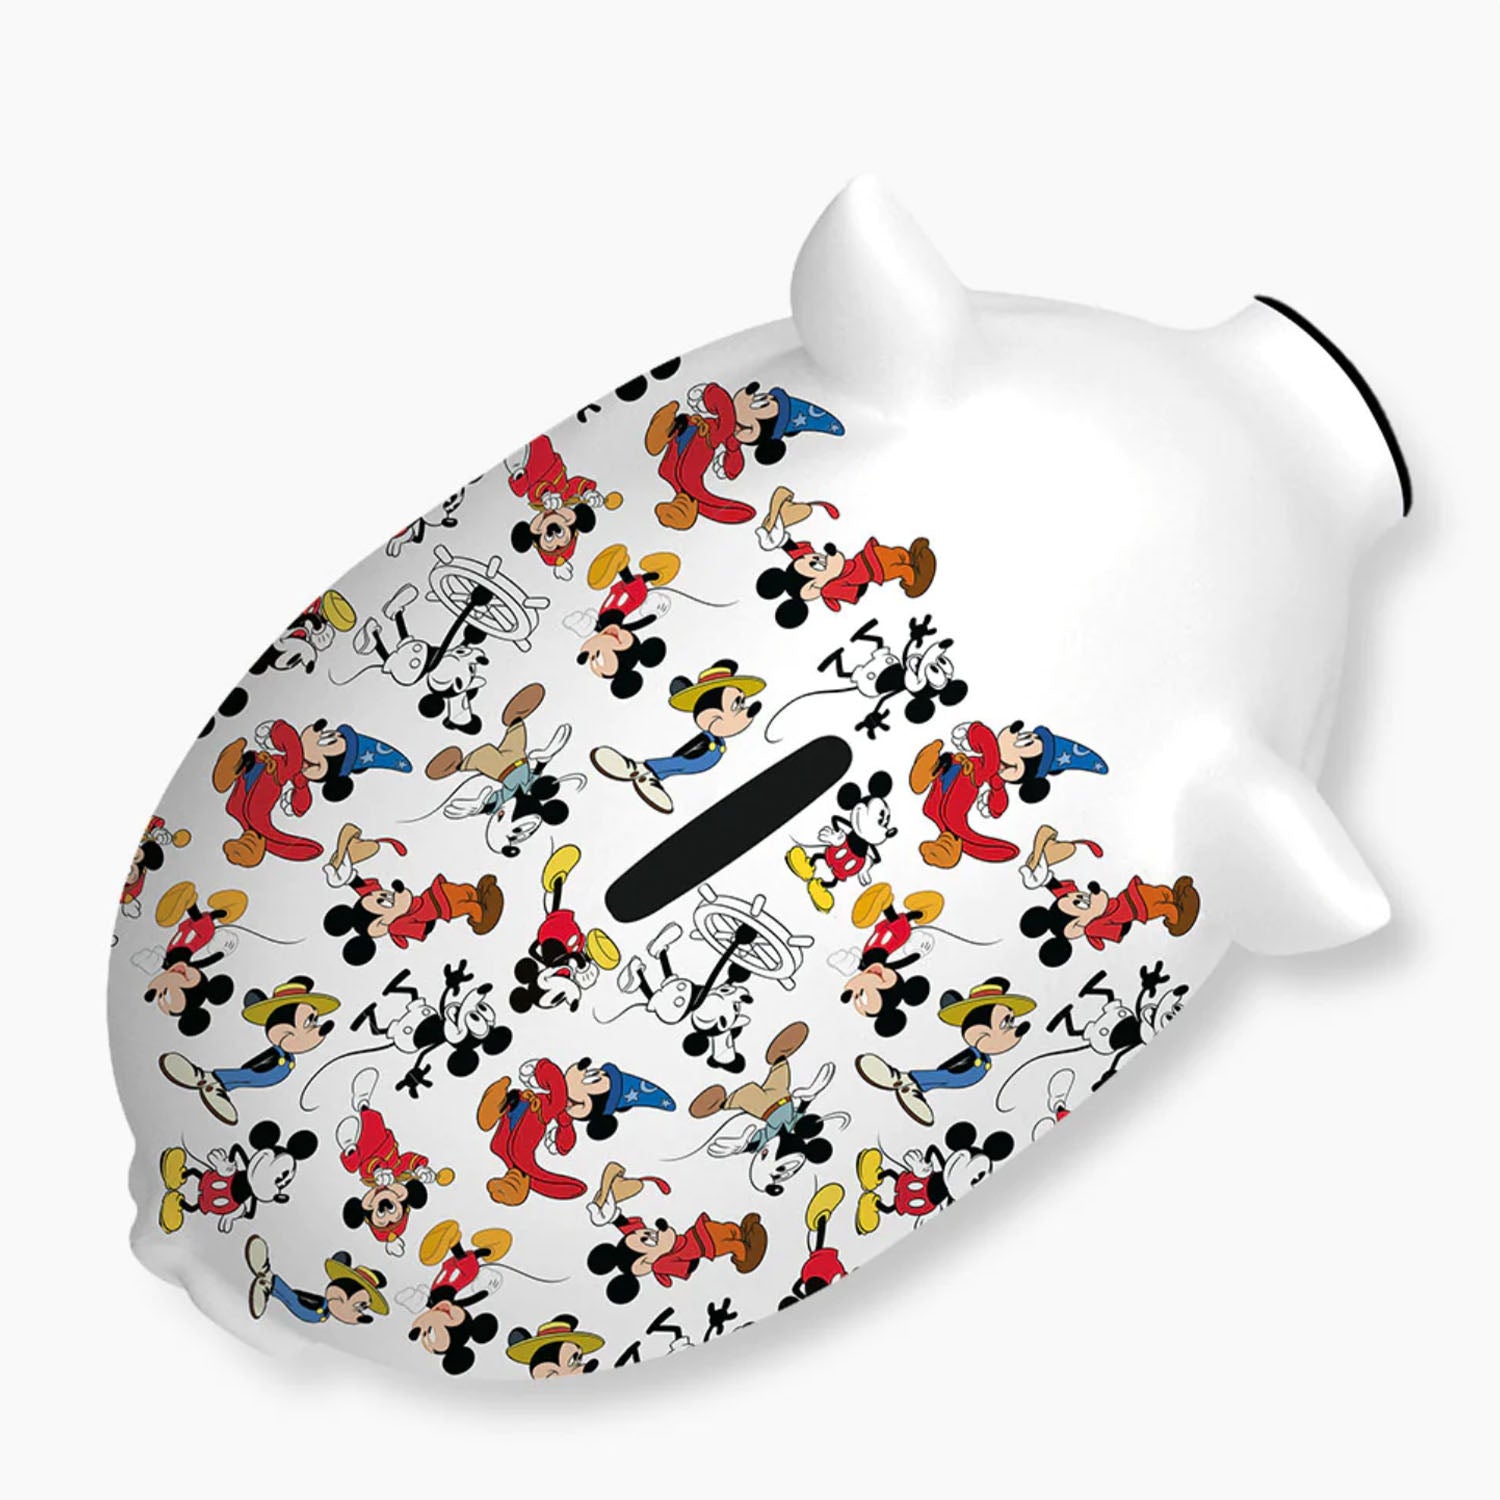 Disney's Mikey Mouse Piggy Bank